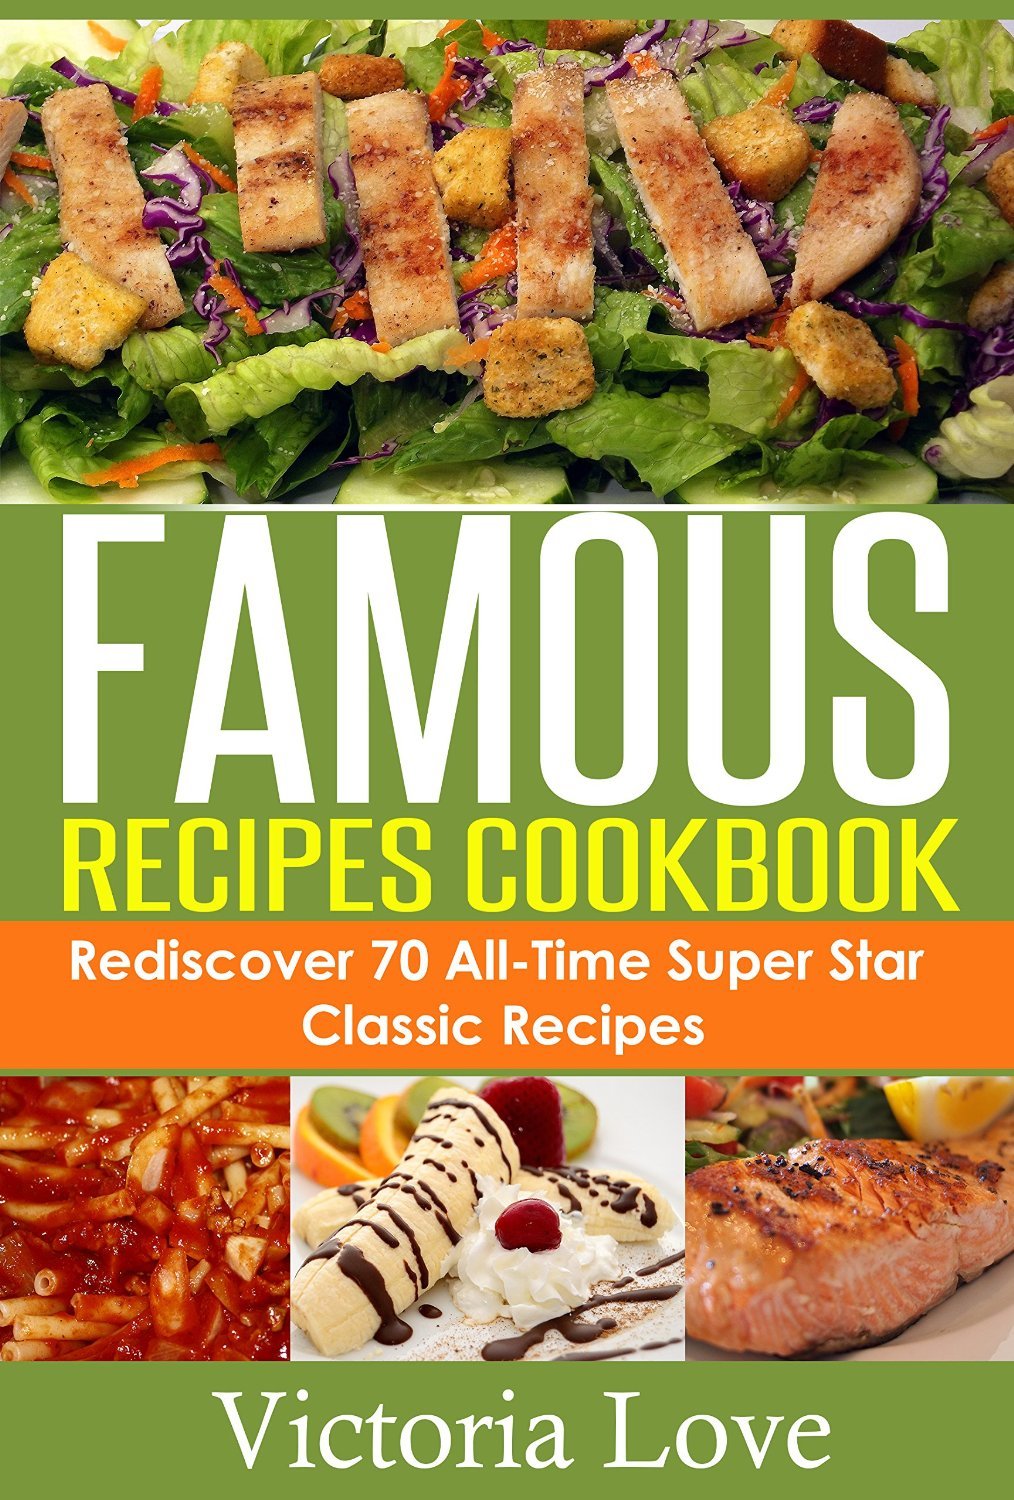 our favorite recipes cookbook